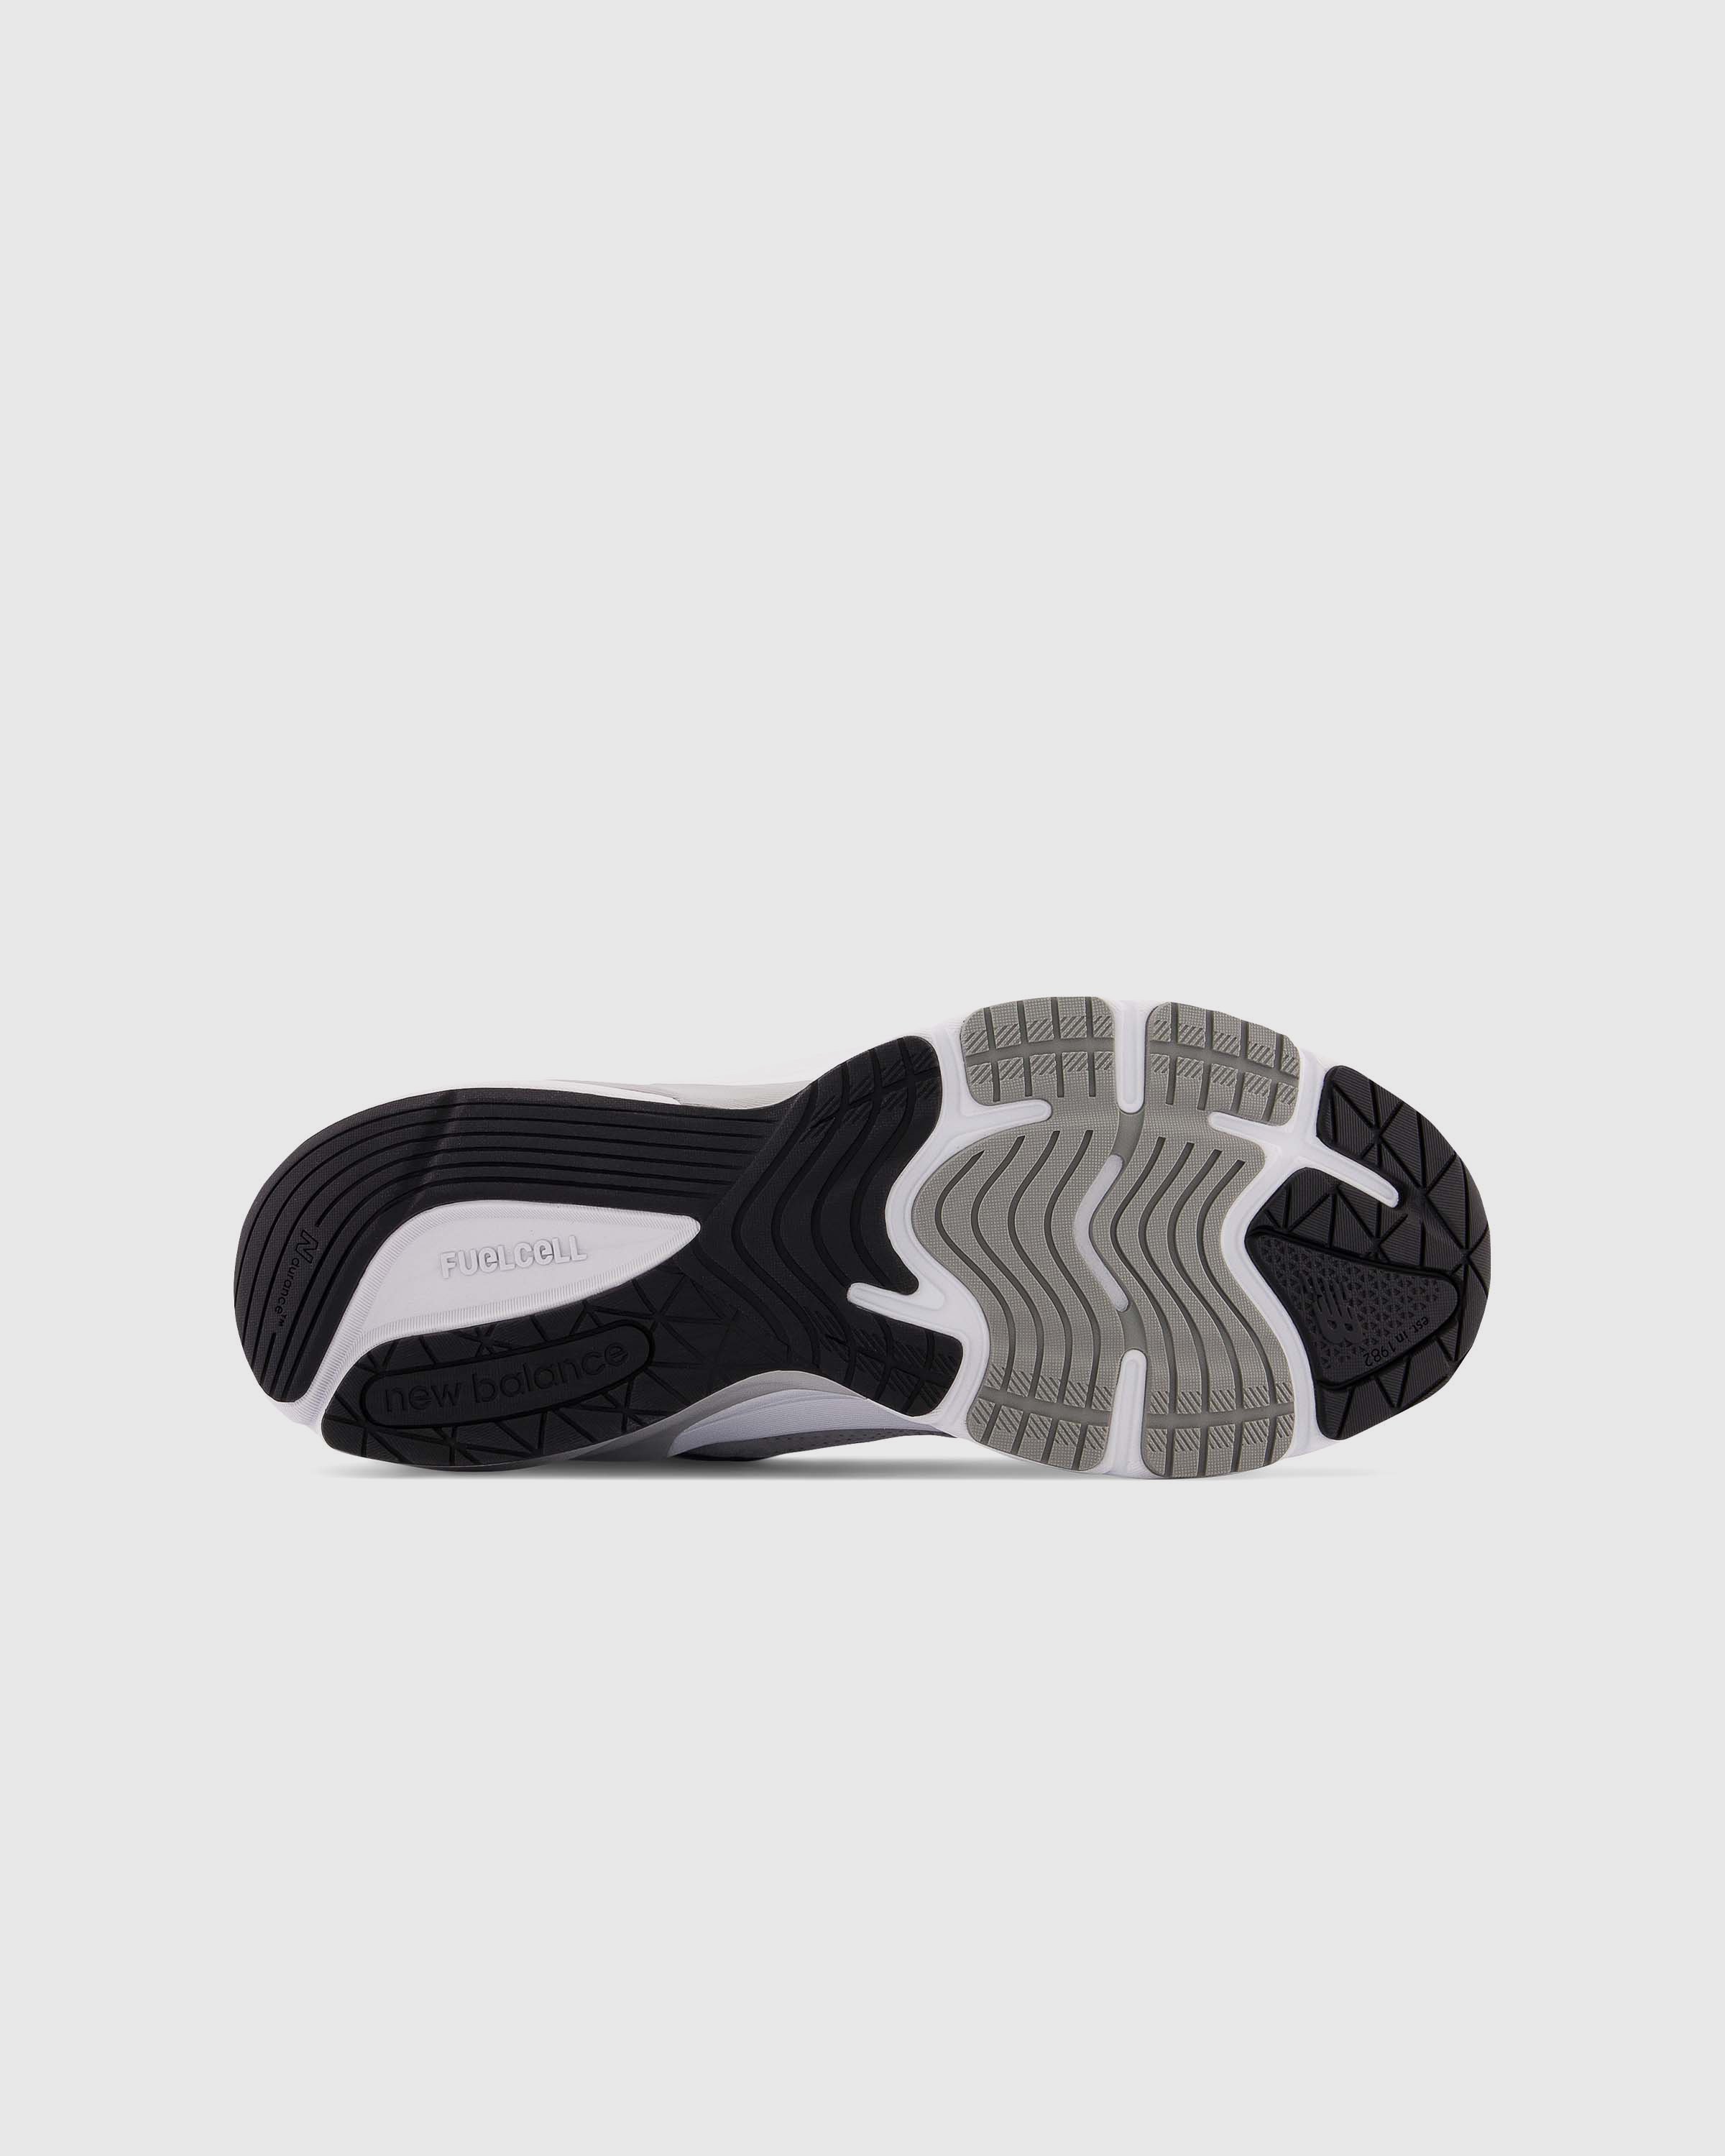 New Balance - M 990v6 Cool Gray - Footwear - Grey - Image 6